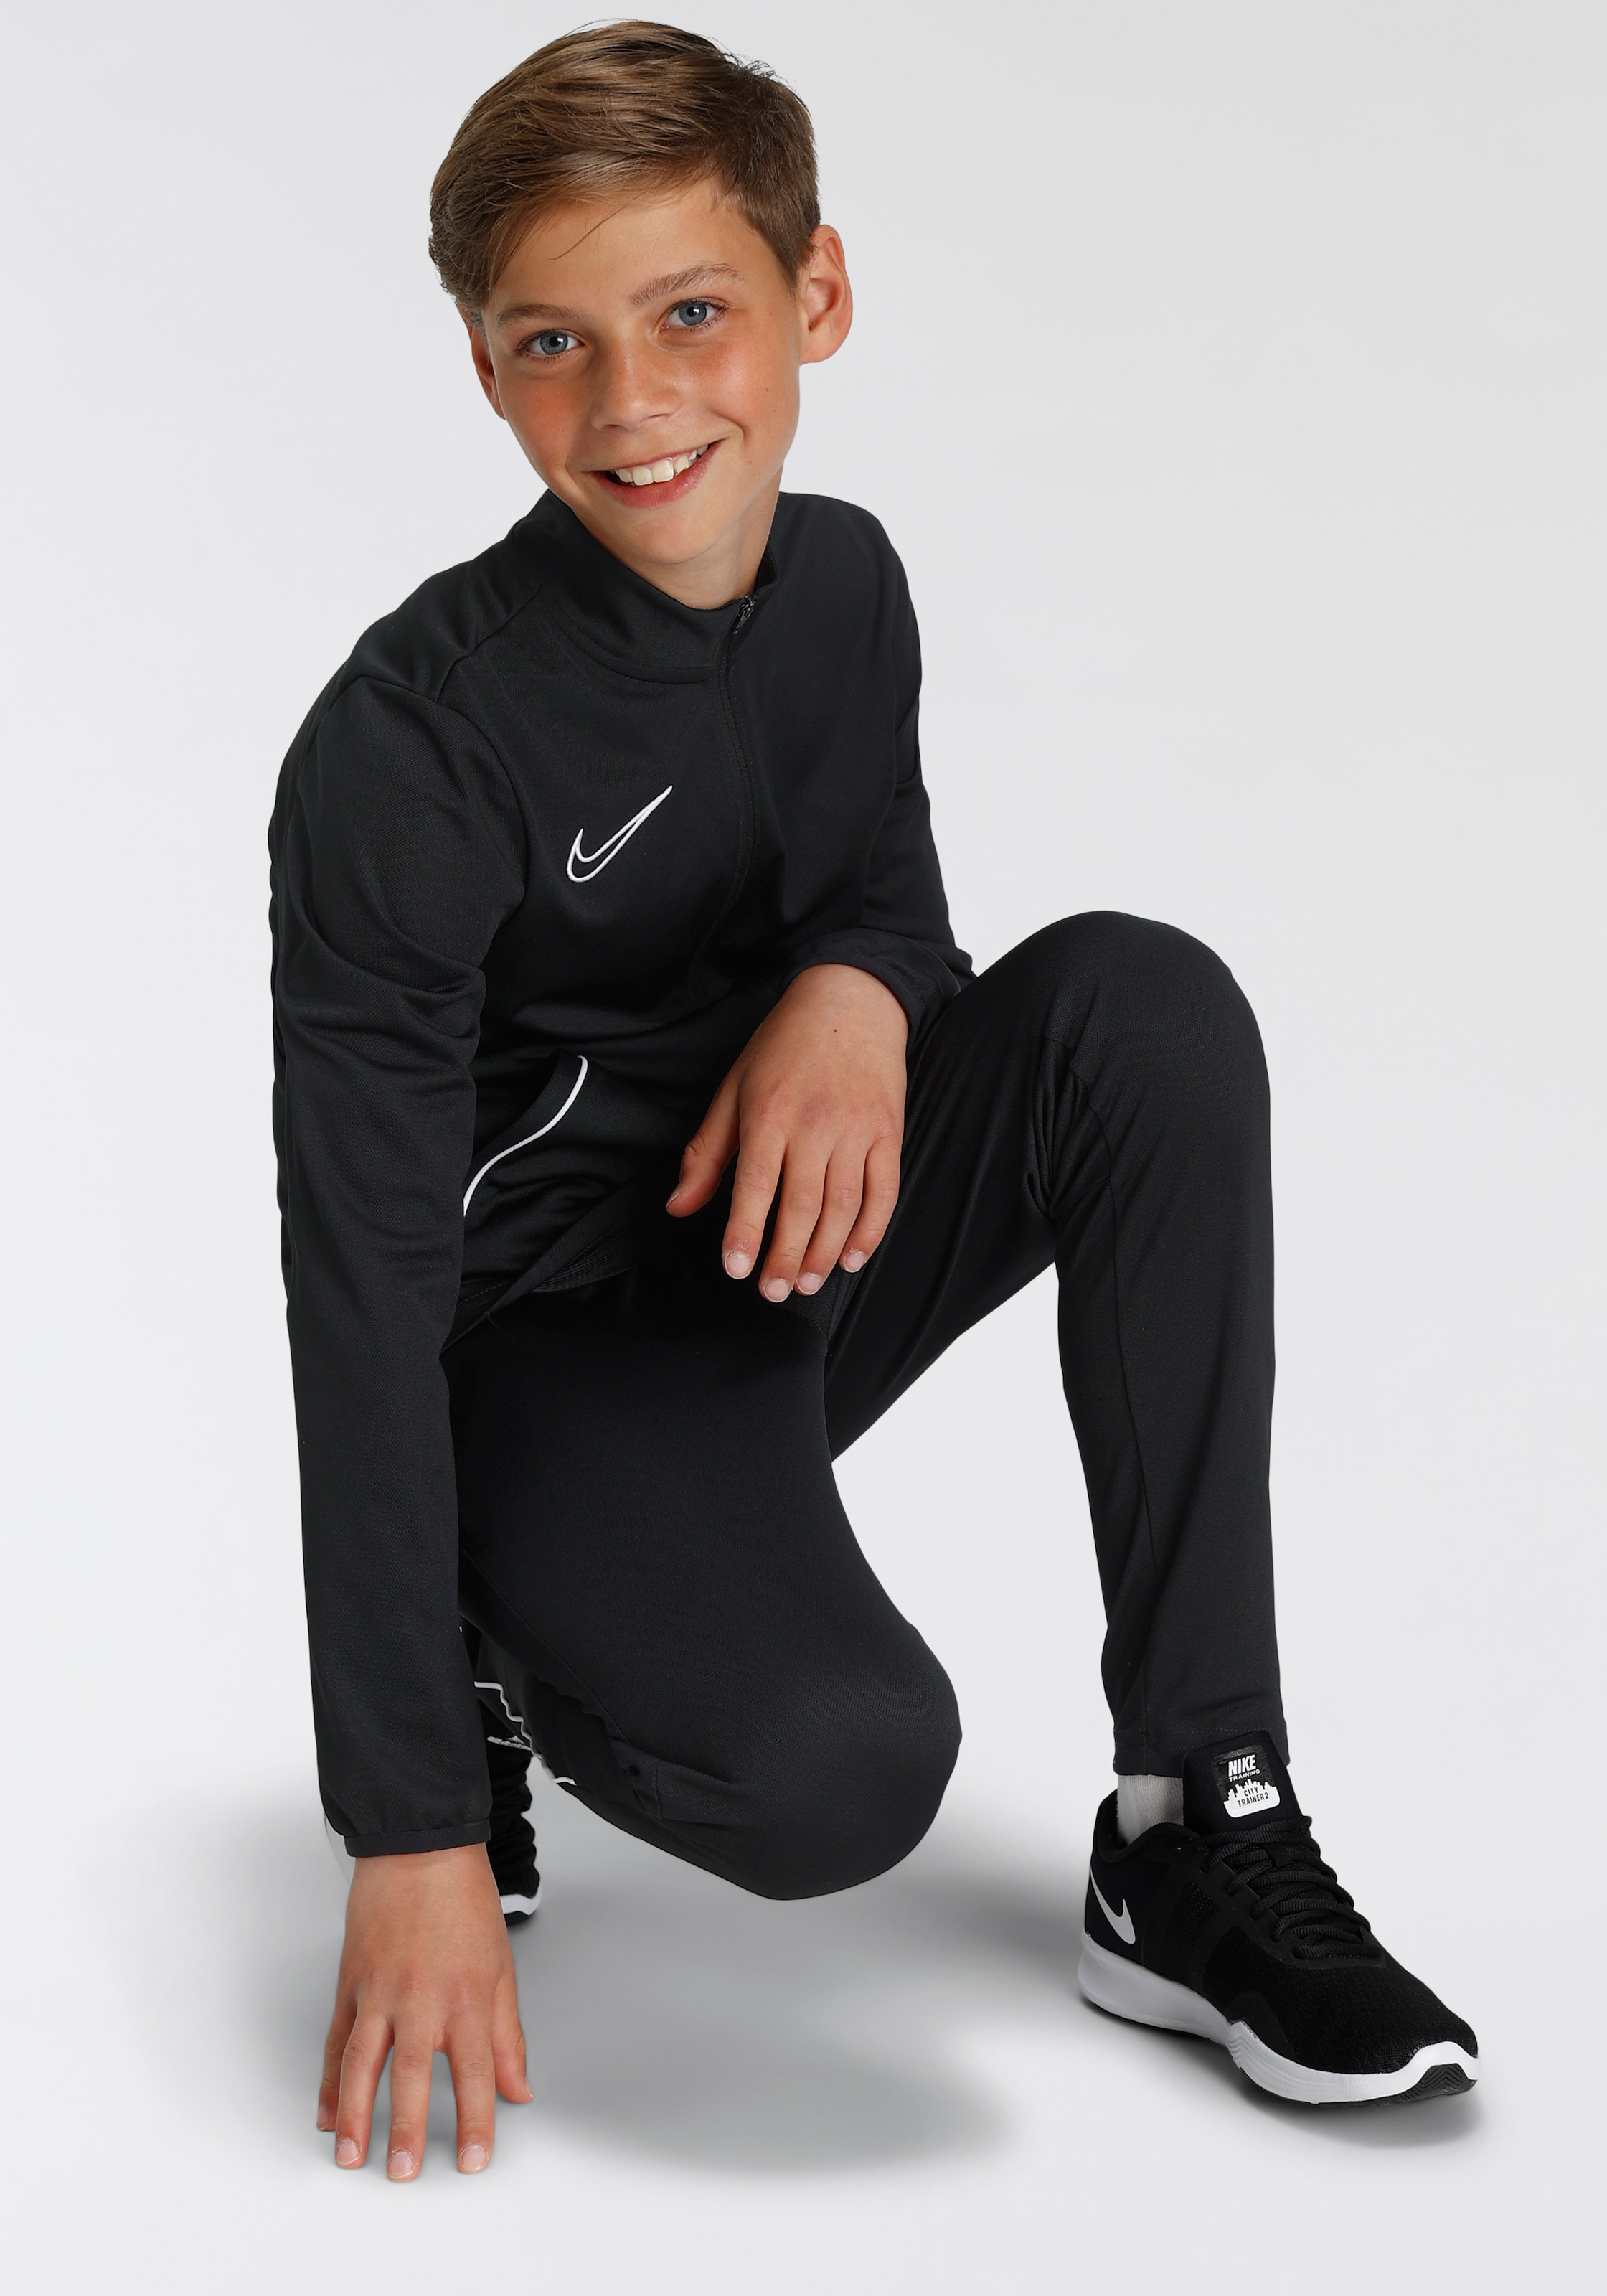 Sale KNIT BIG KIDS ACADEMY Nike SOCCER« | »DRI-FIT BAUR Trainingsanzug bei